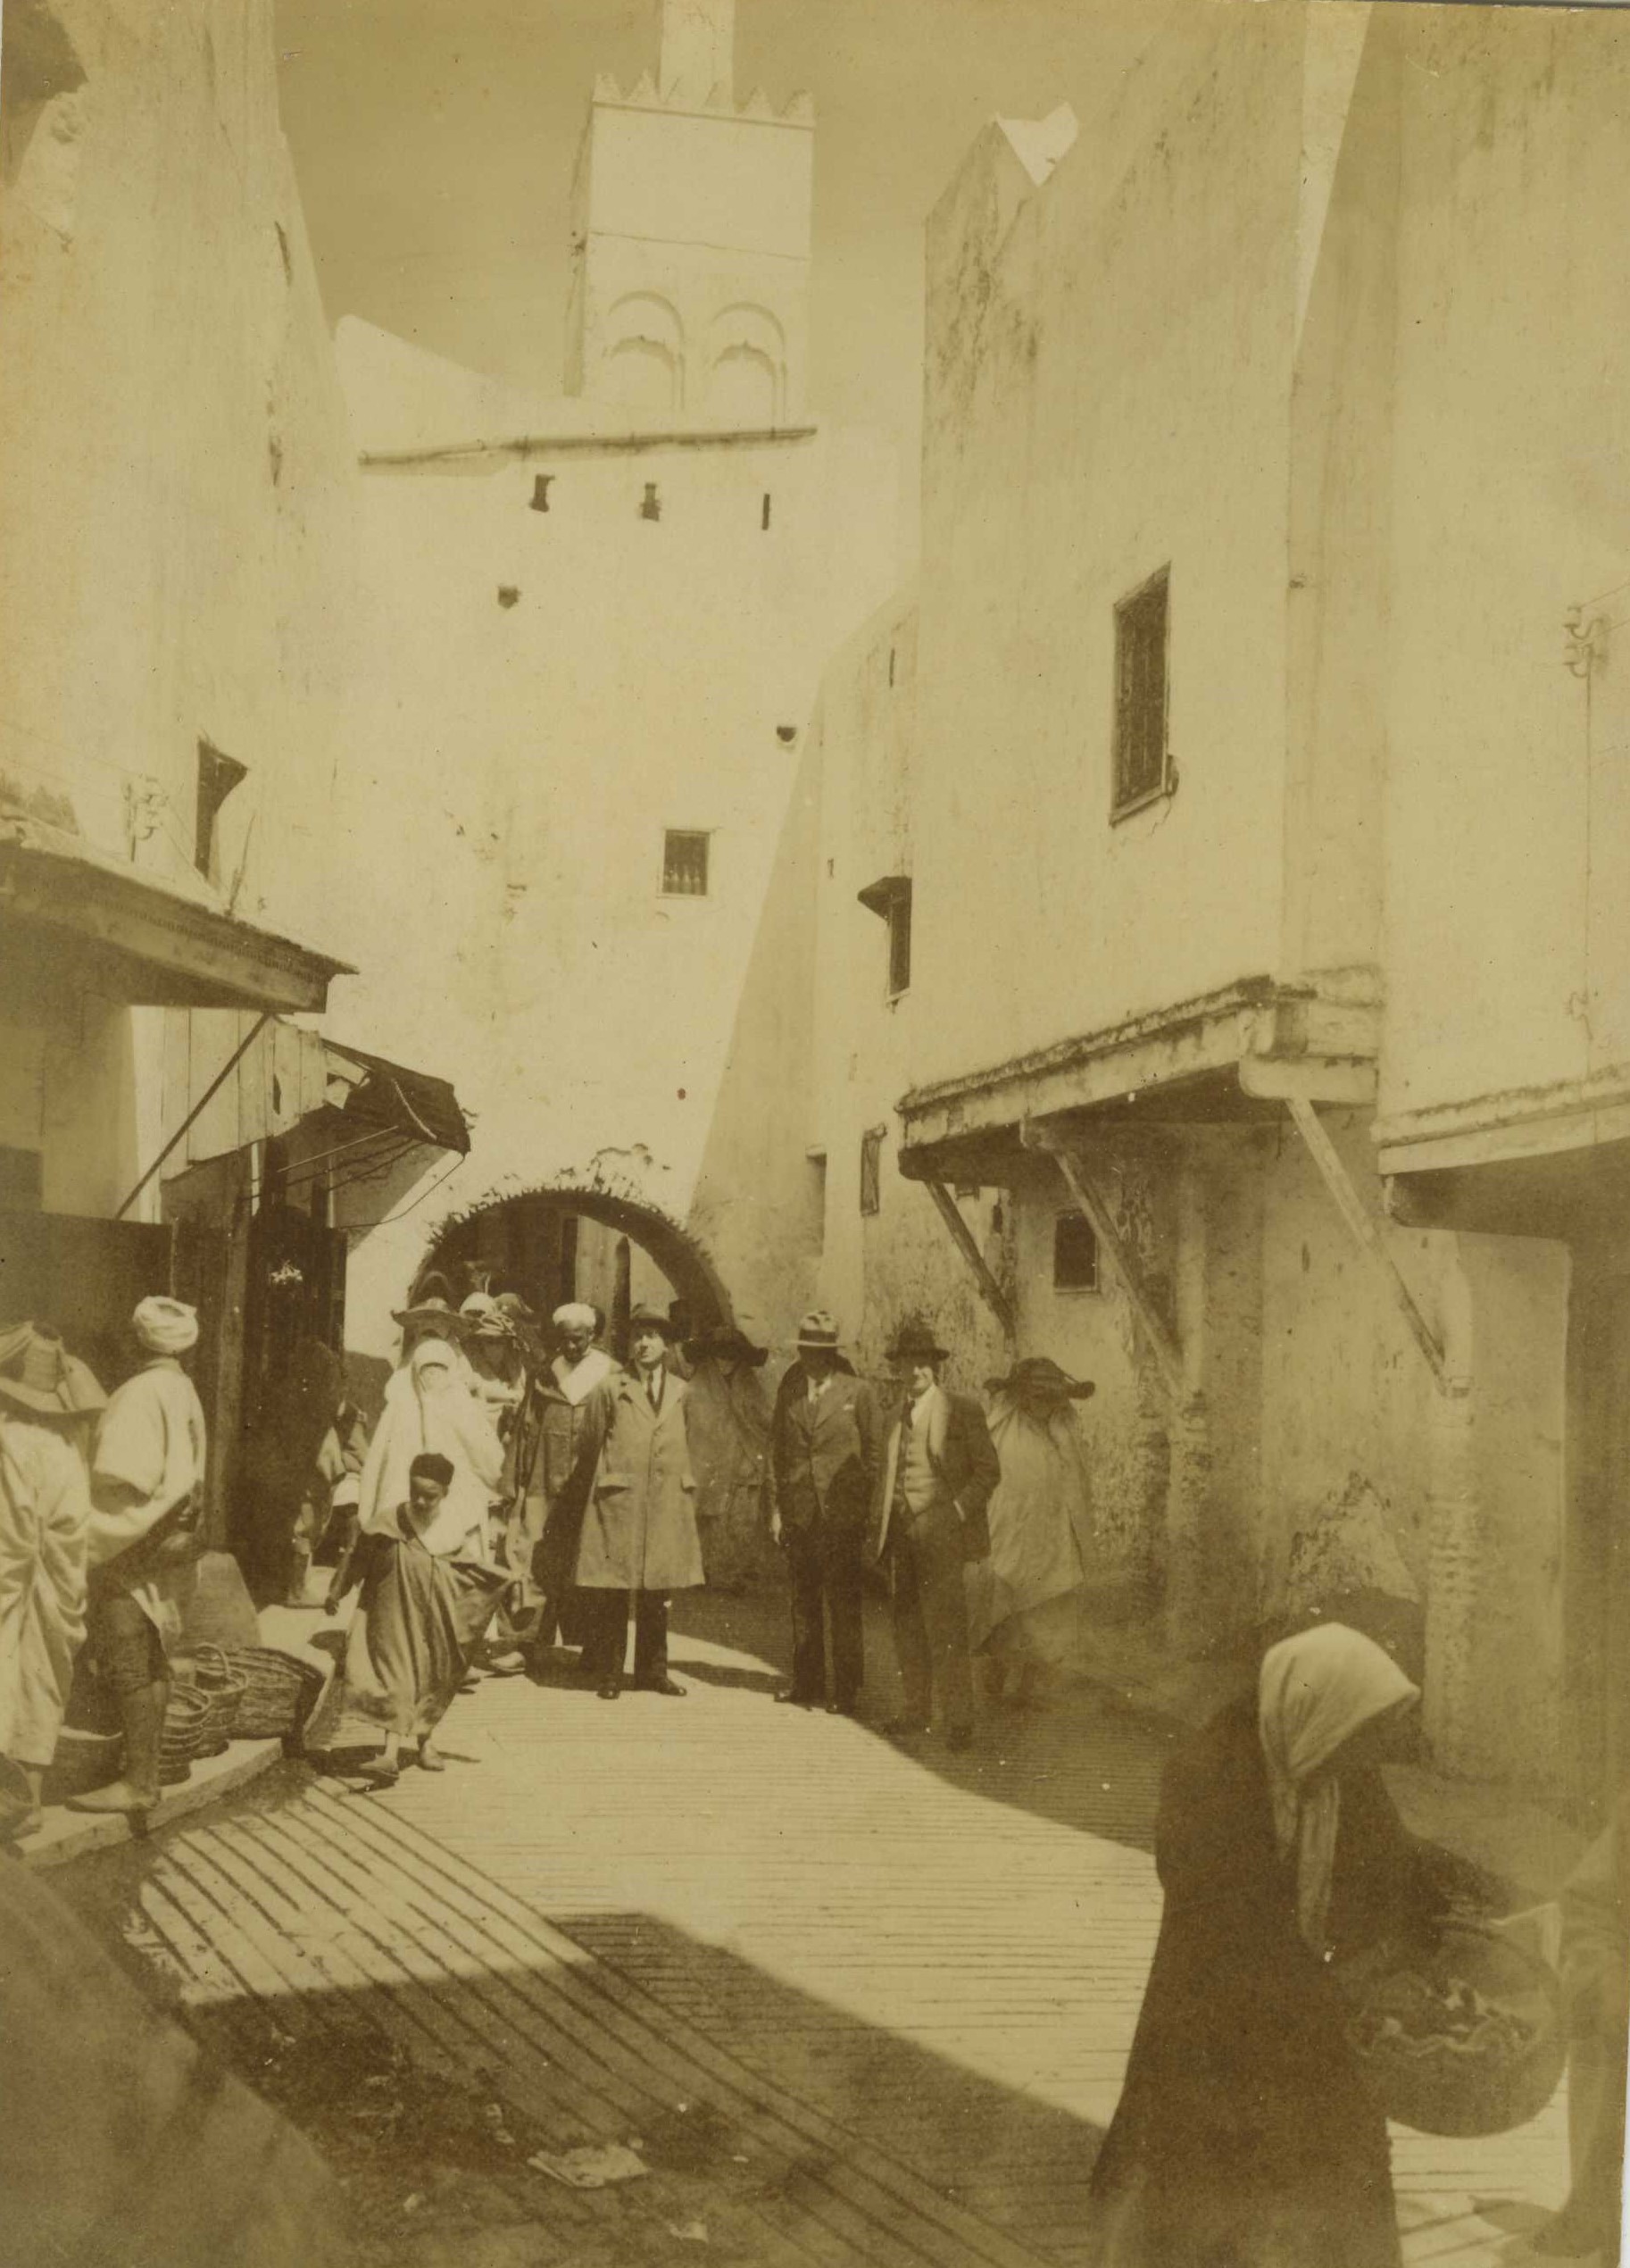 Medina with figures in scene 